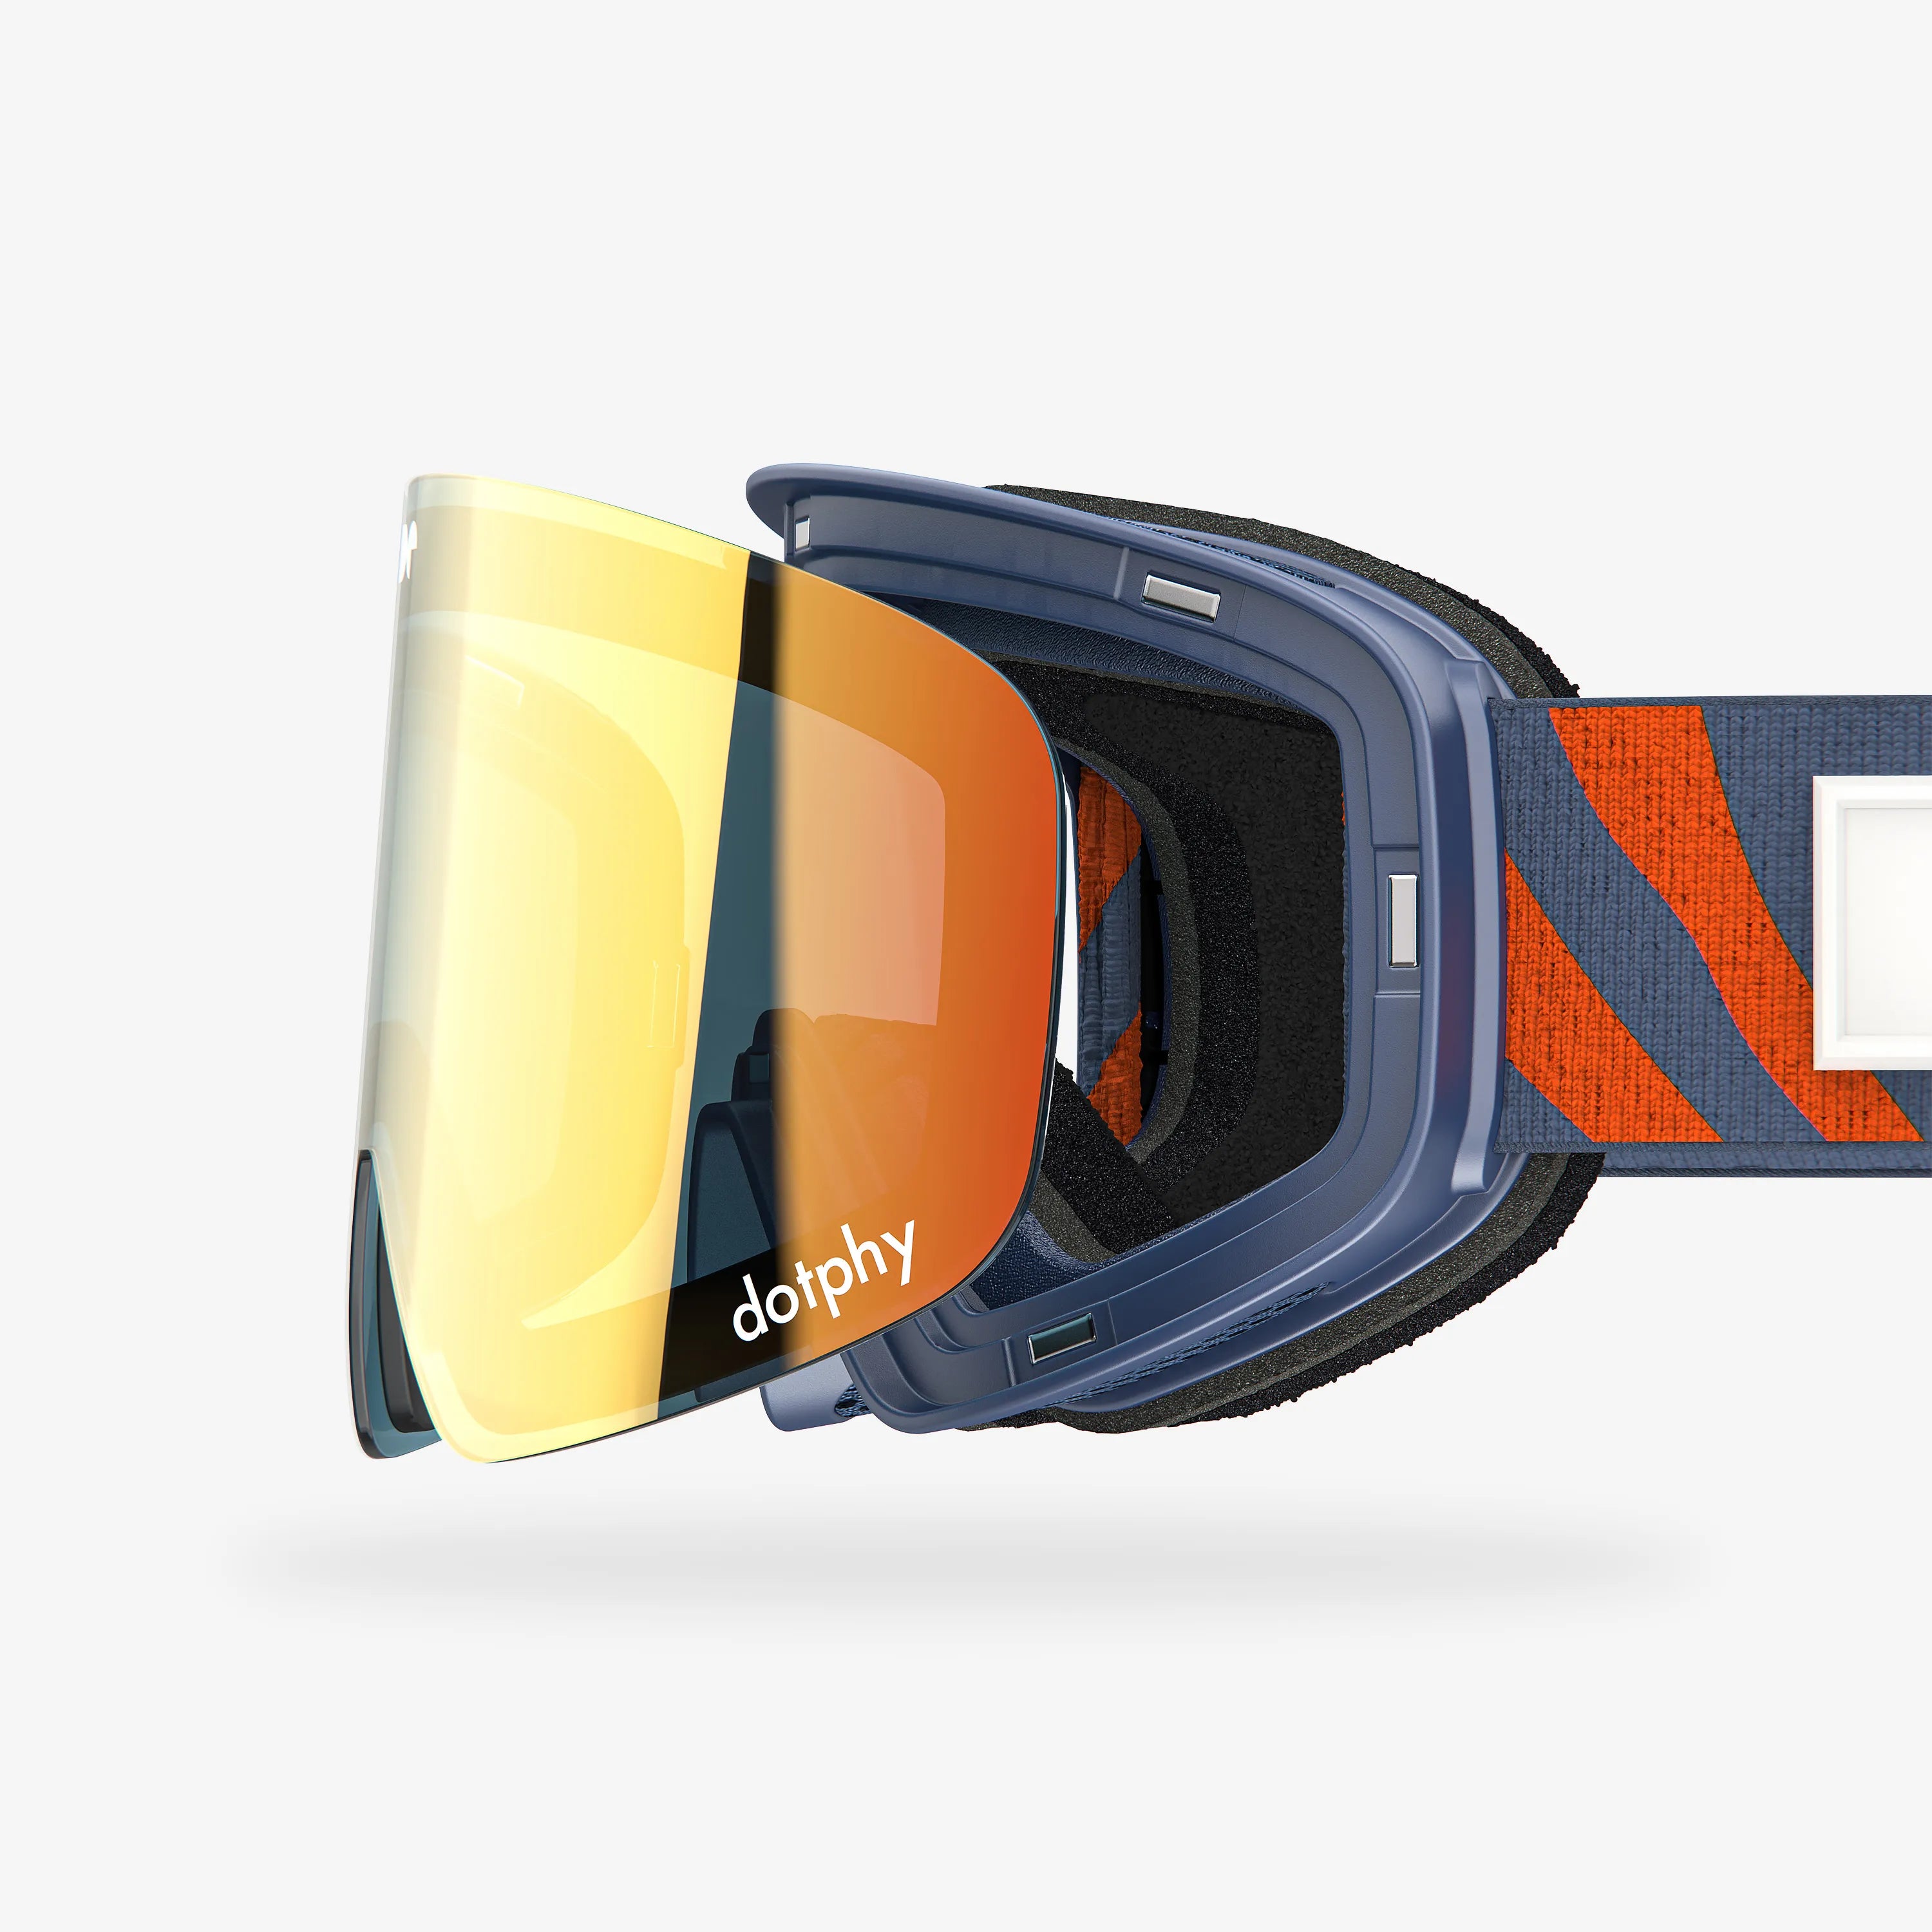 Defender 1000 Volcano Ski Goggle